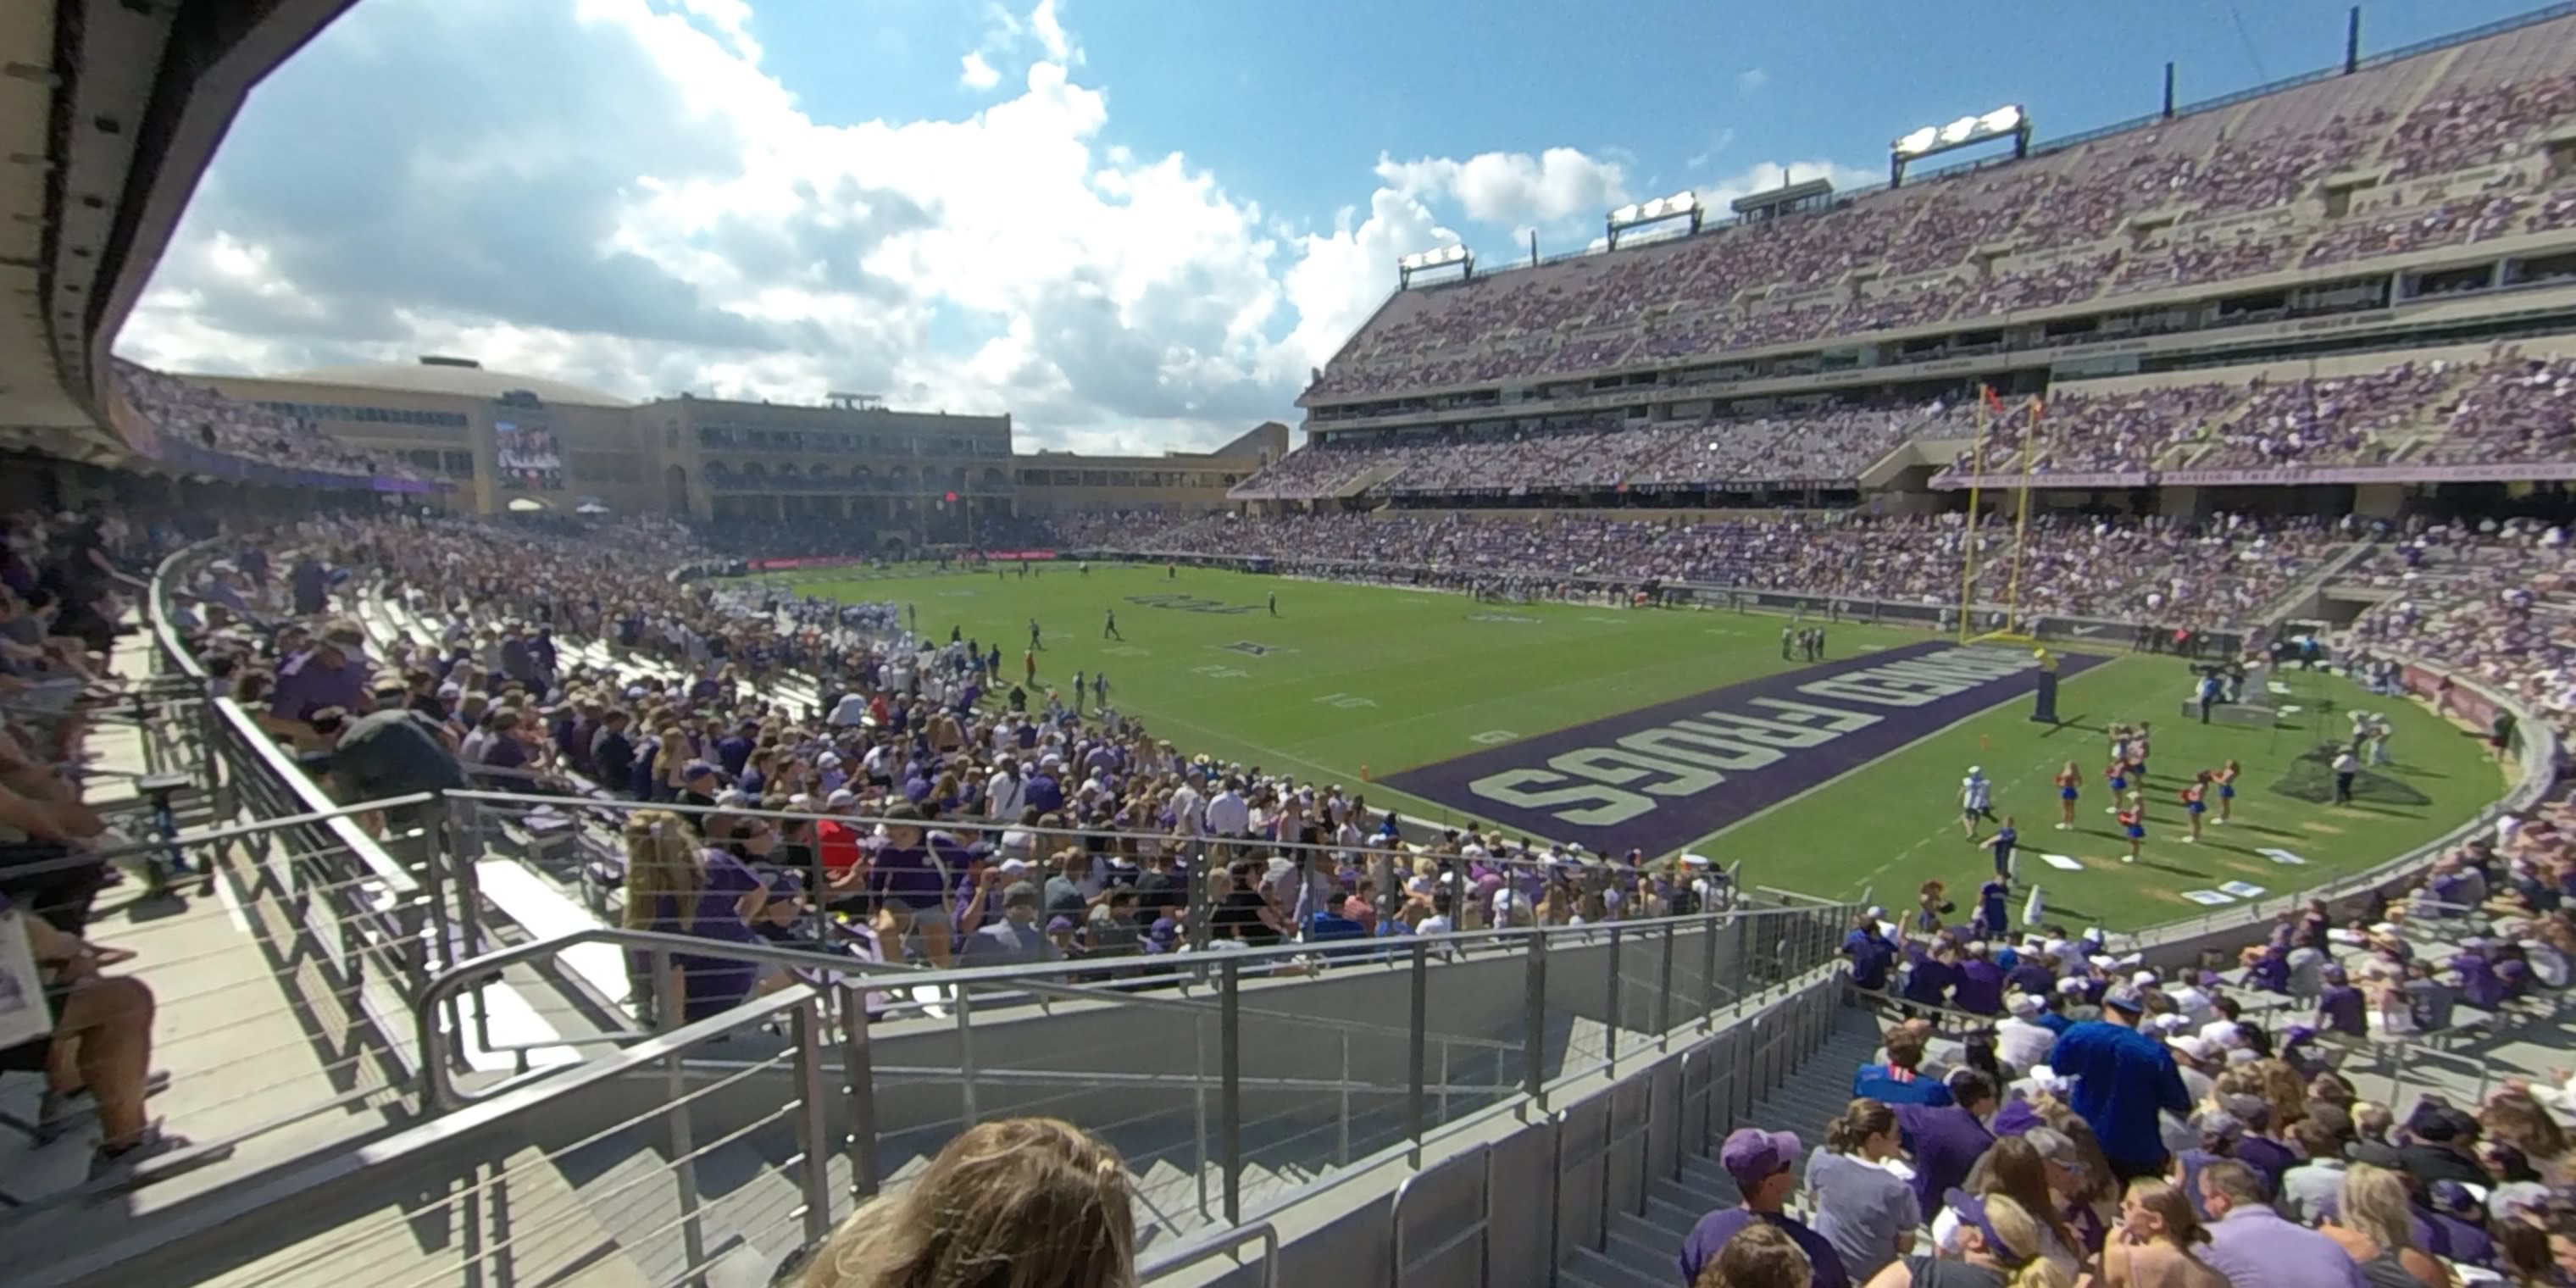 section 119 panoramic seat view  - amon carter stadium